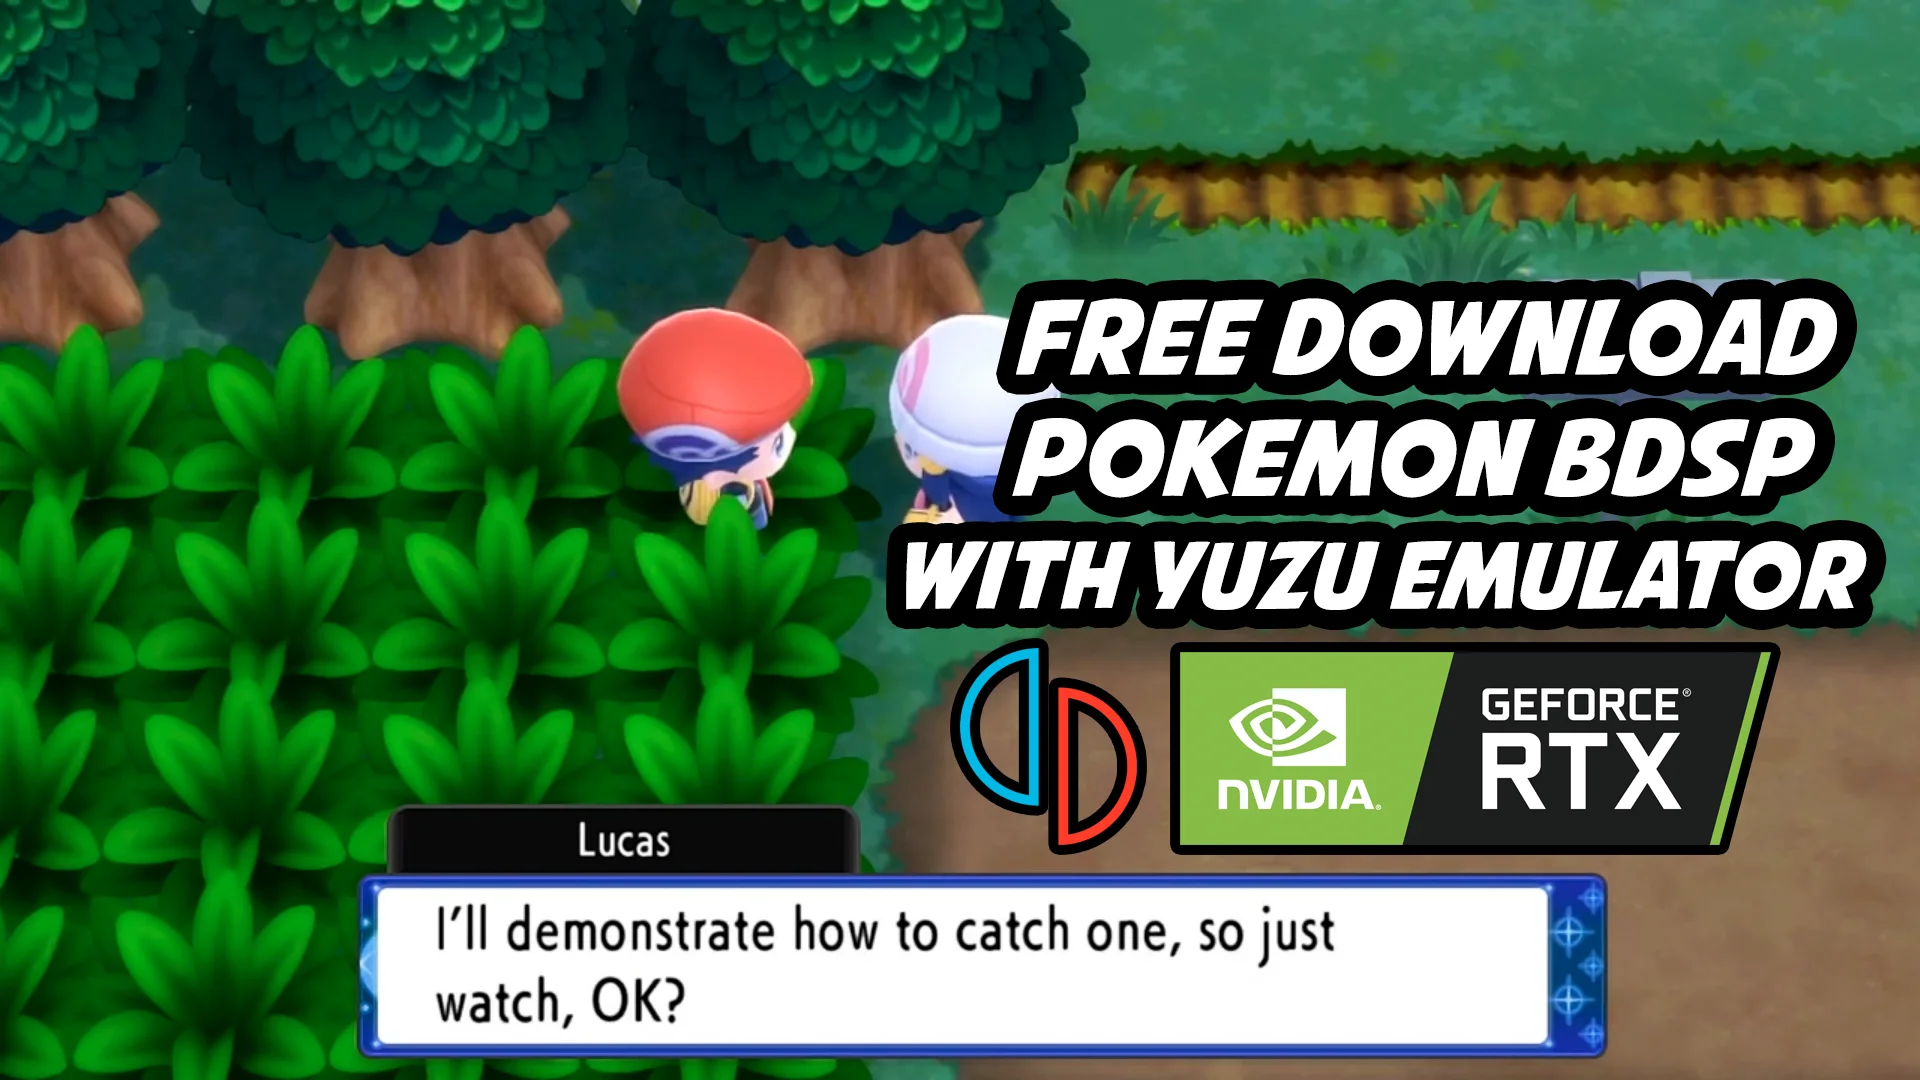 How To Play Pokemon Brilliant Diamond on PC + Yuzu Emulator on Vimeo